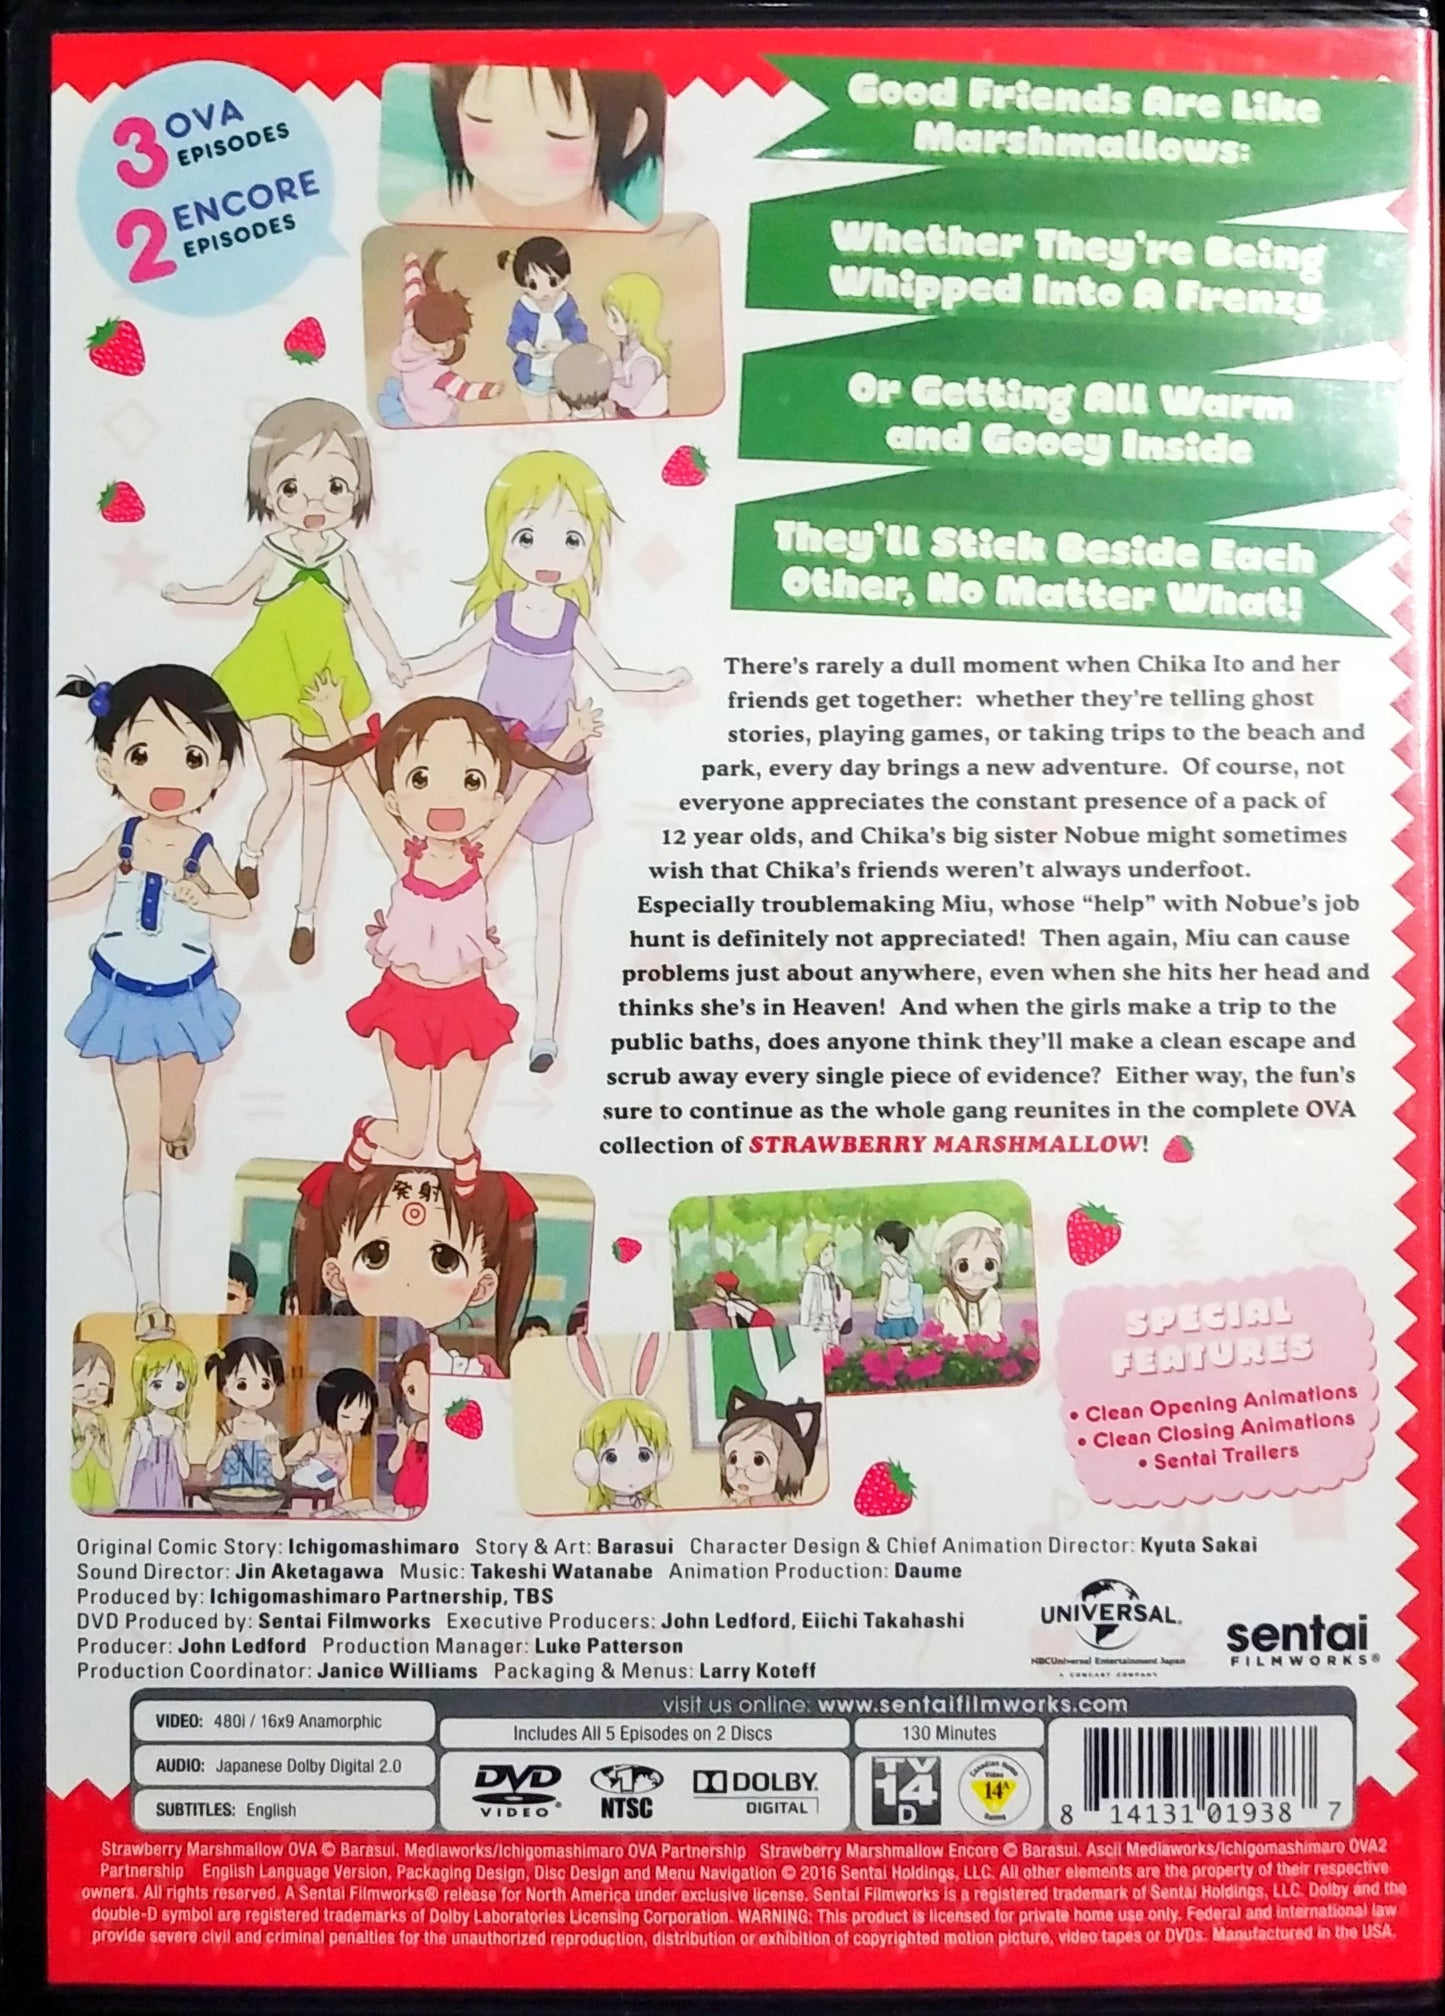 Strawberry Marshmallow DVD OVA Collection Sealed